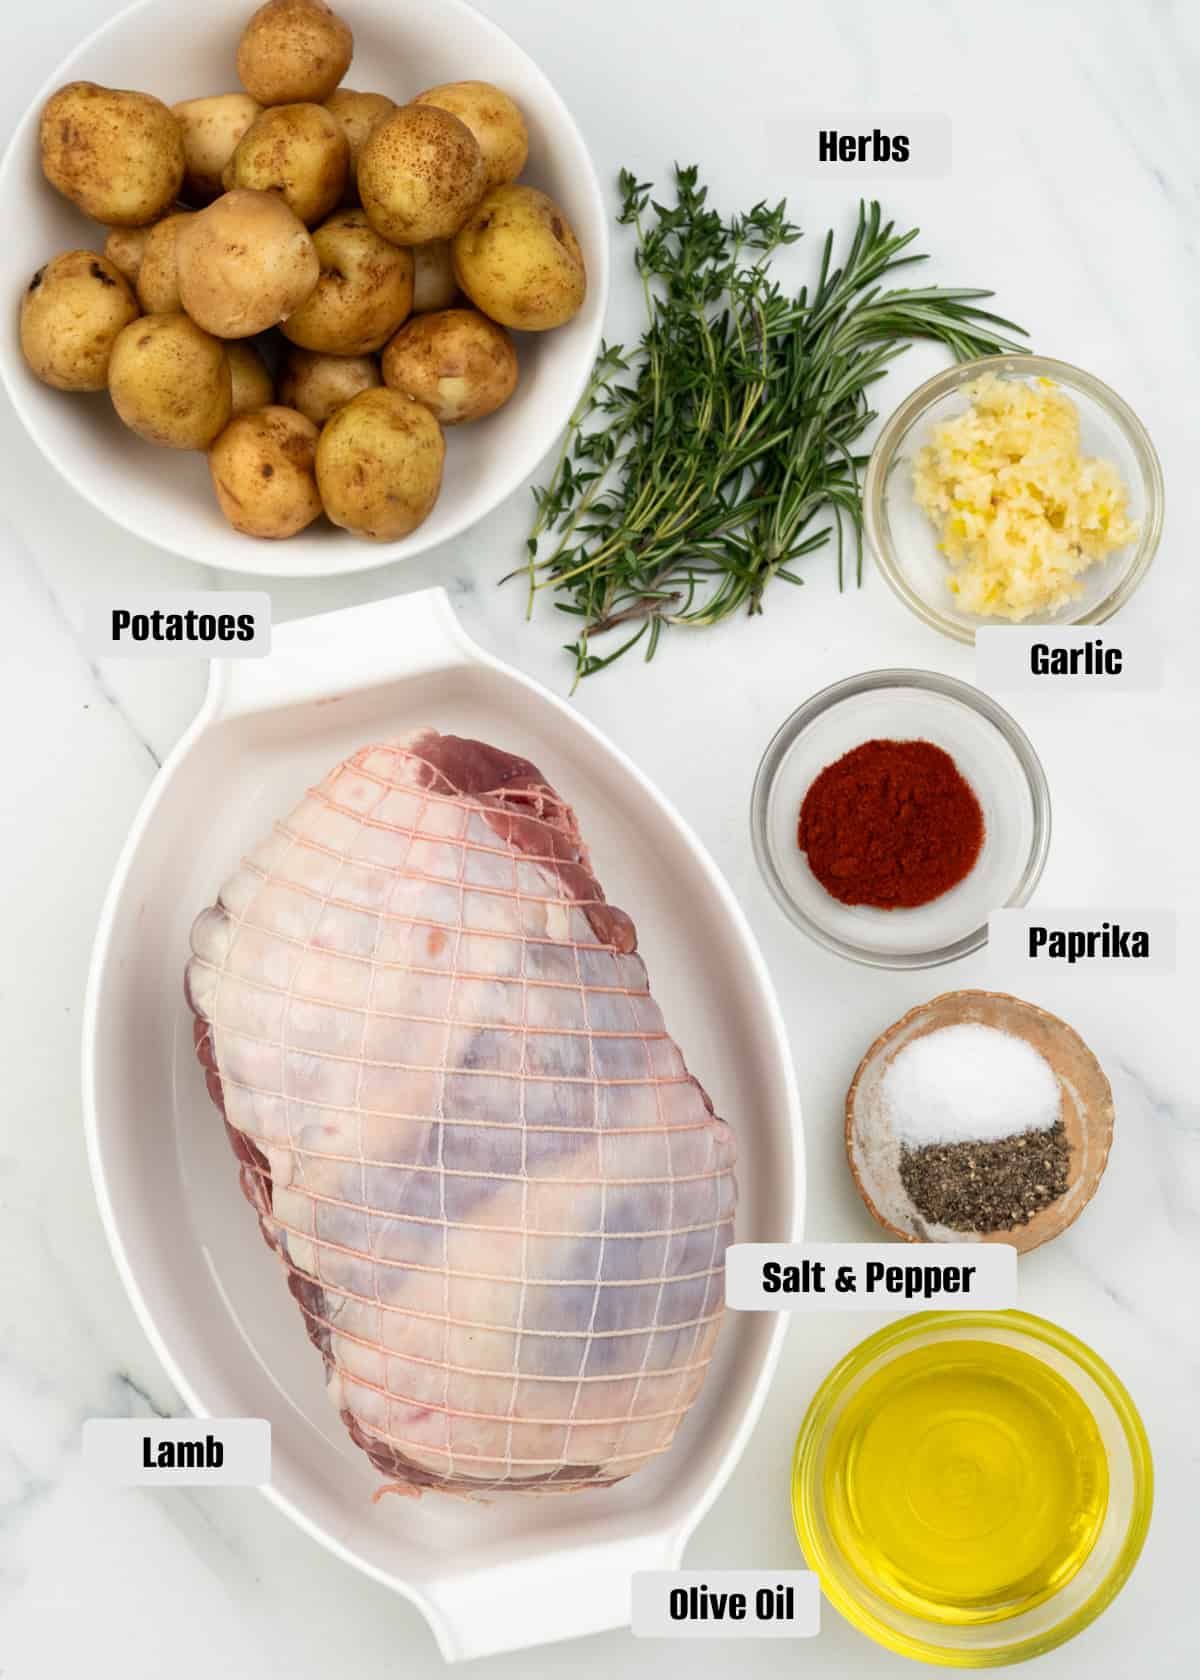 Ingredients like boneless lamb shoulder, potatoes, garlic, herbs, paprika, salt, pepper, and olive oil.